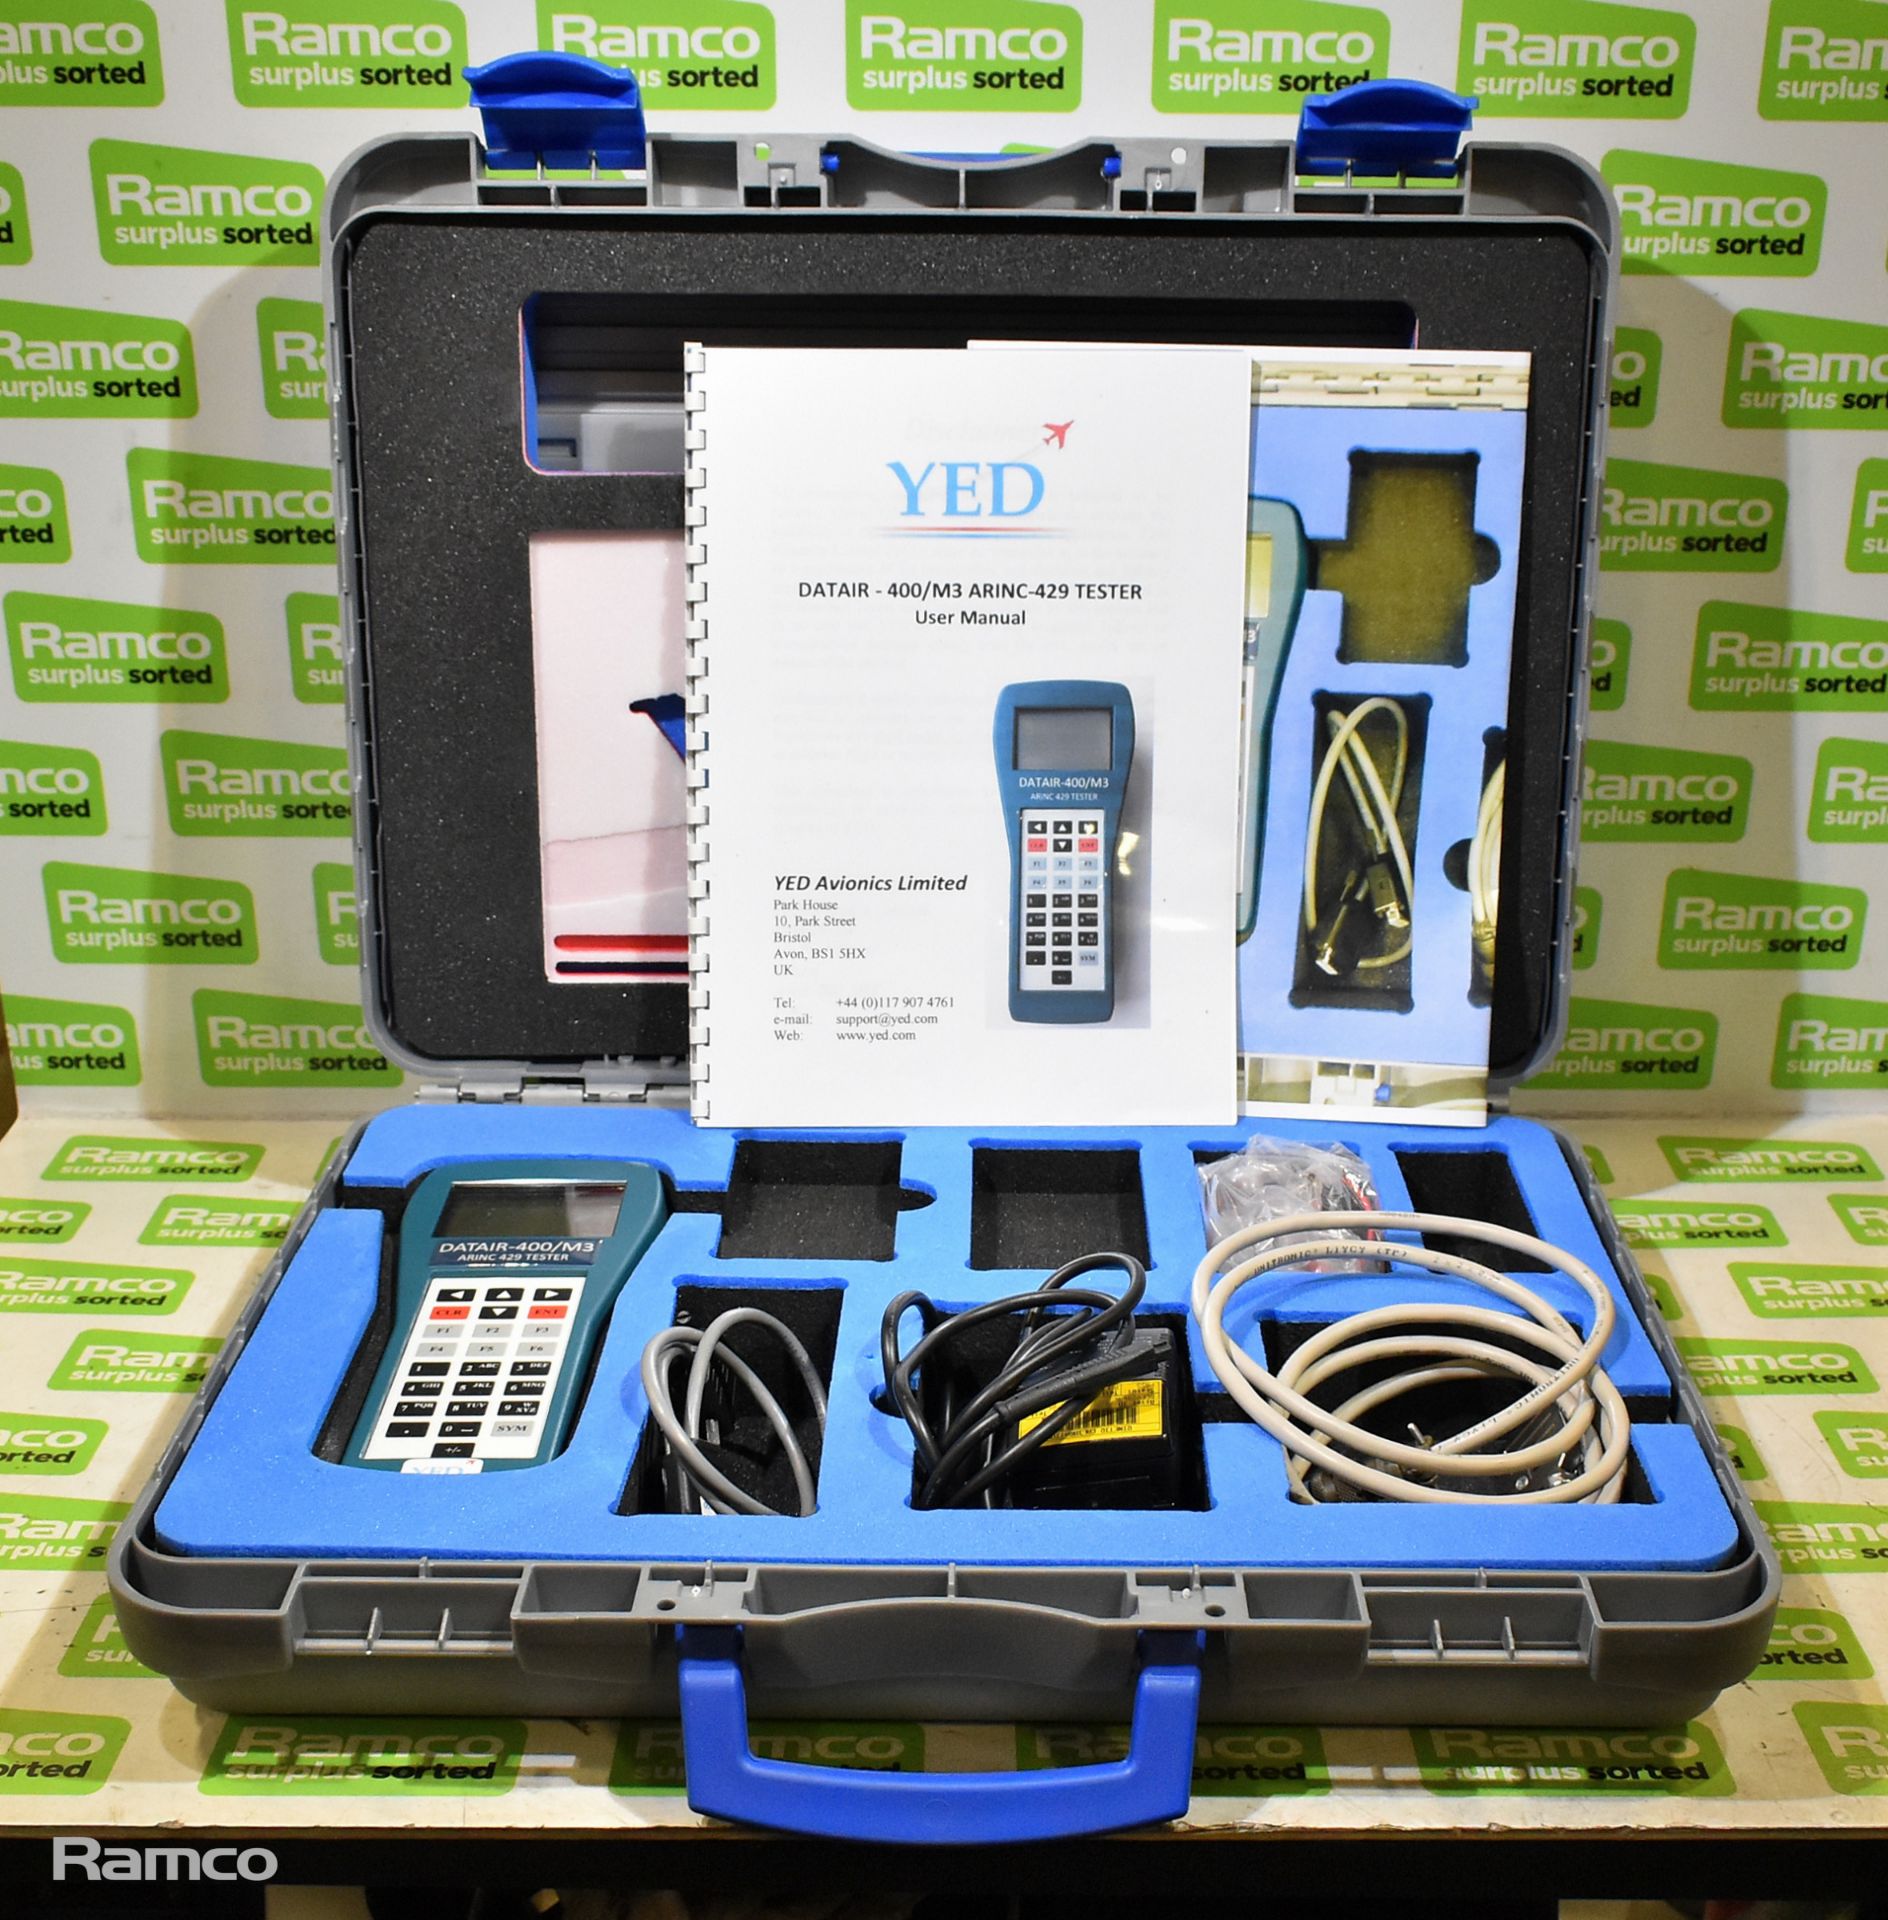 YED Datair Arinc 429 handheld tester kit